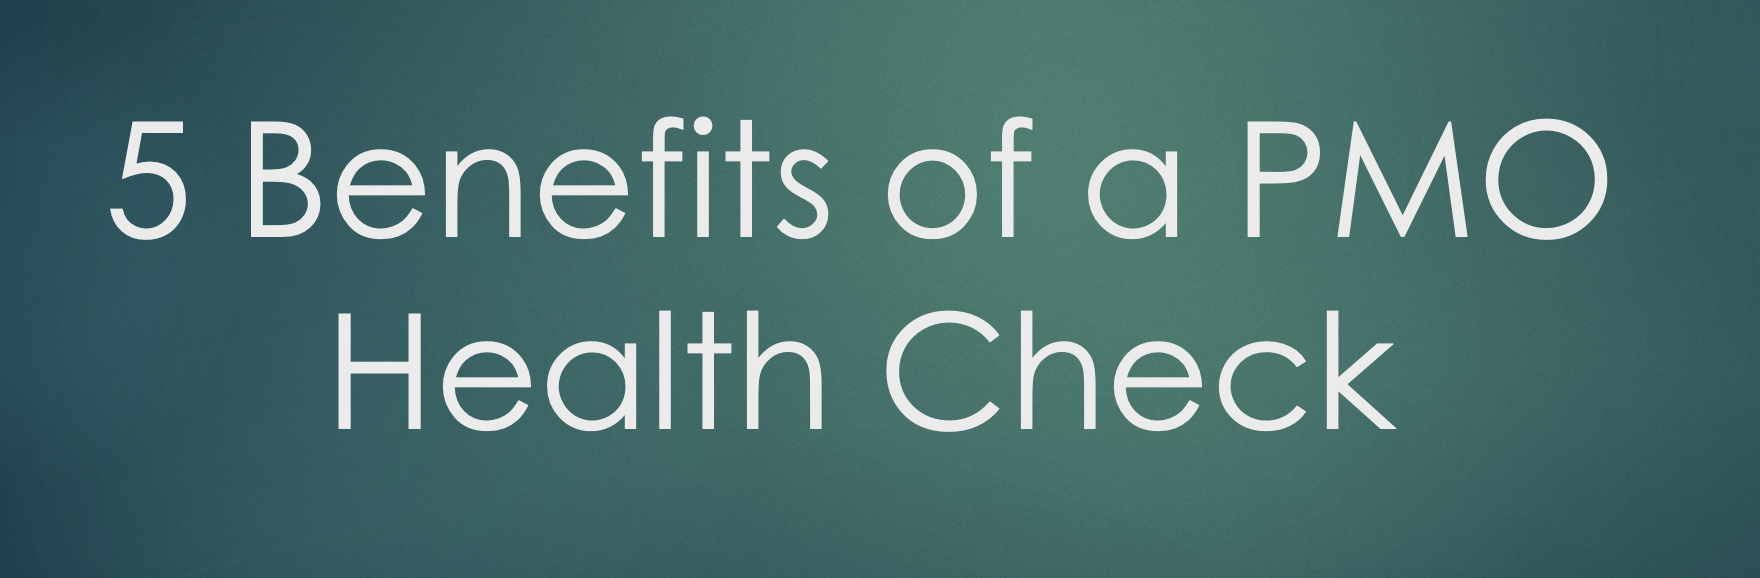 5 Benefits of a PMO Health Check